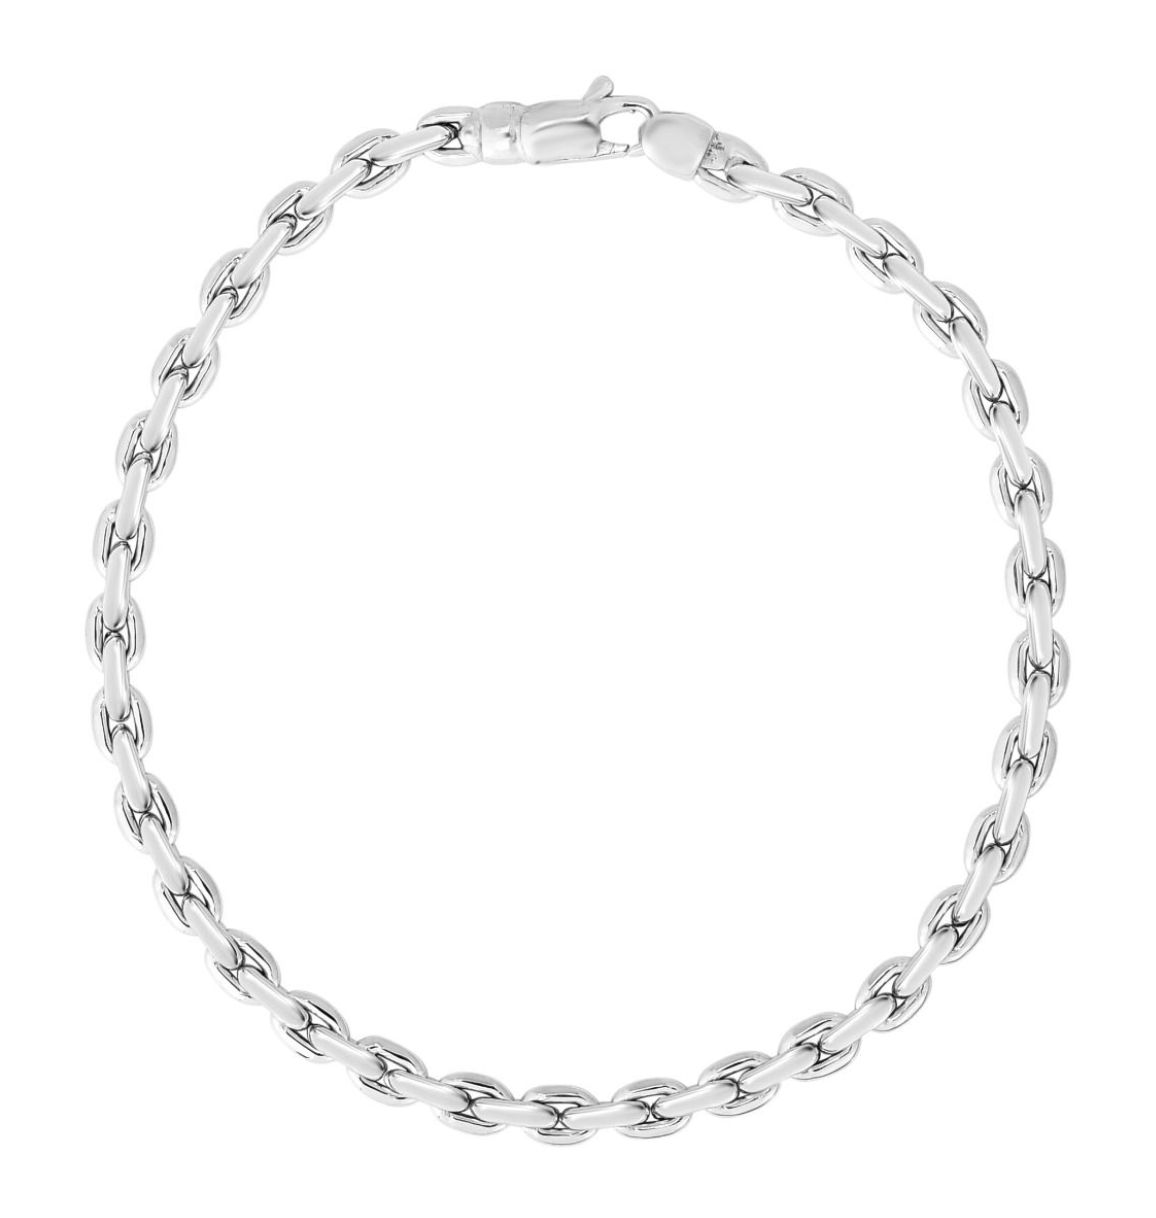 LOLA - The Interlocking Link Bracelet